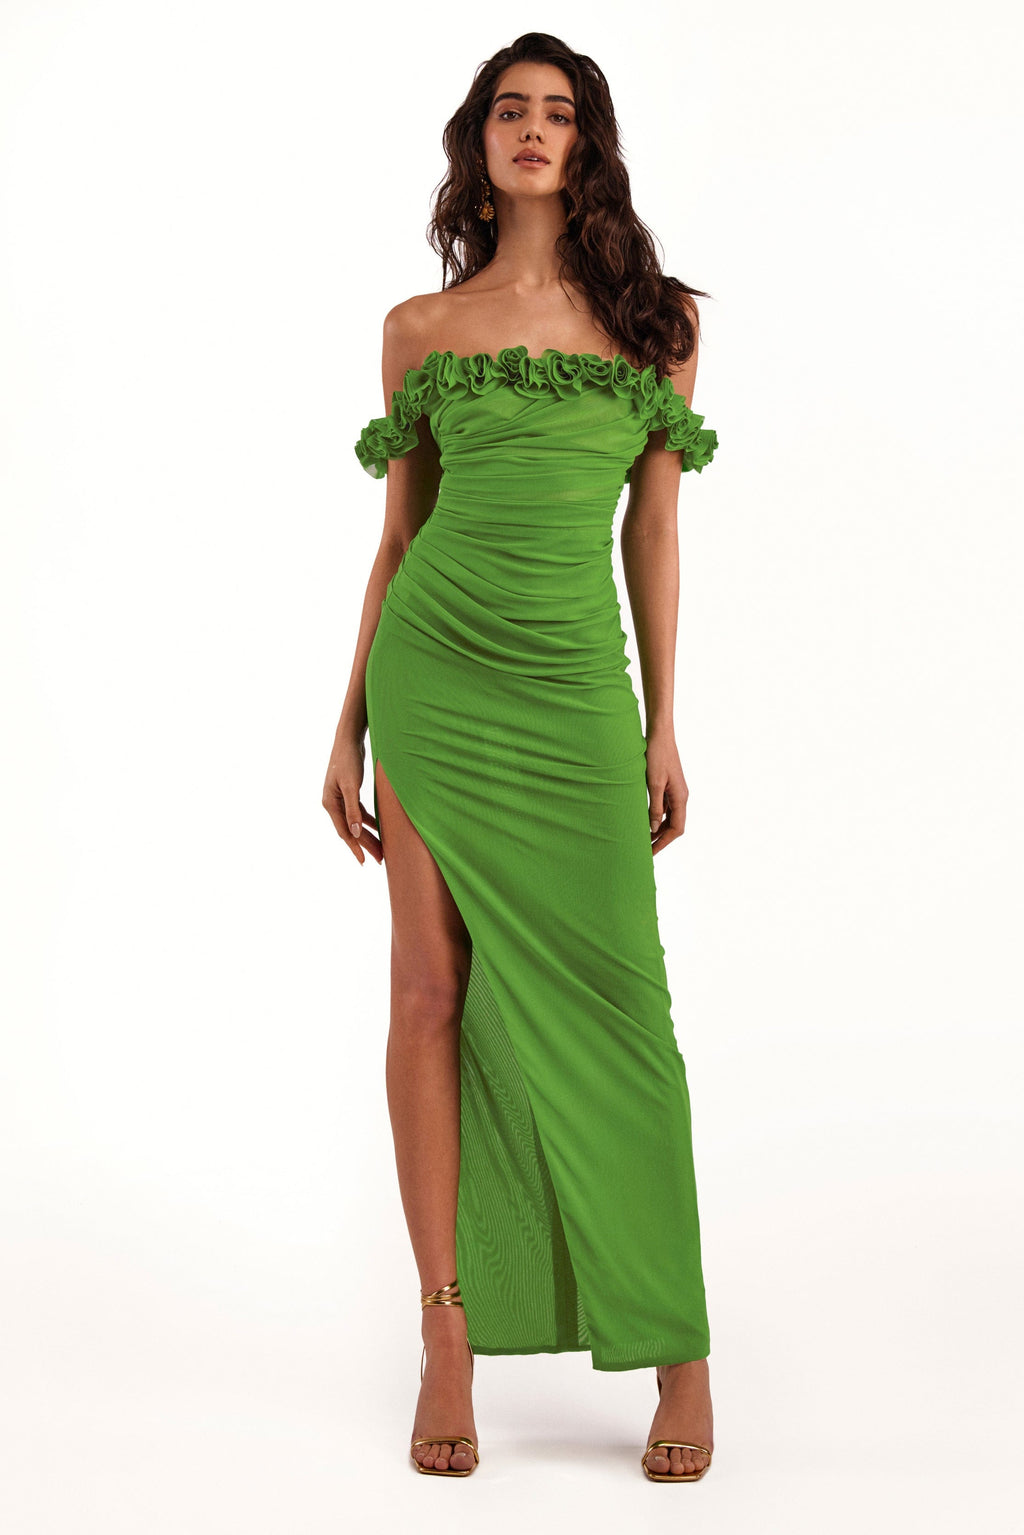 Artful off-the-shoulder evening dress in green